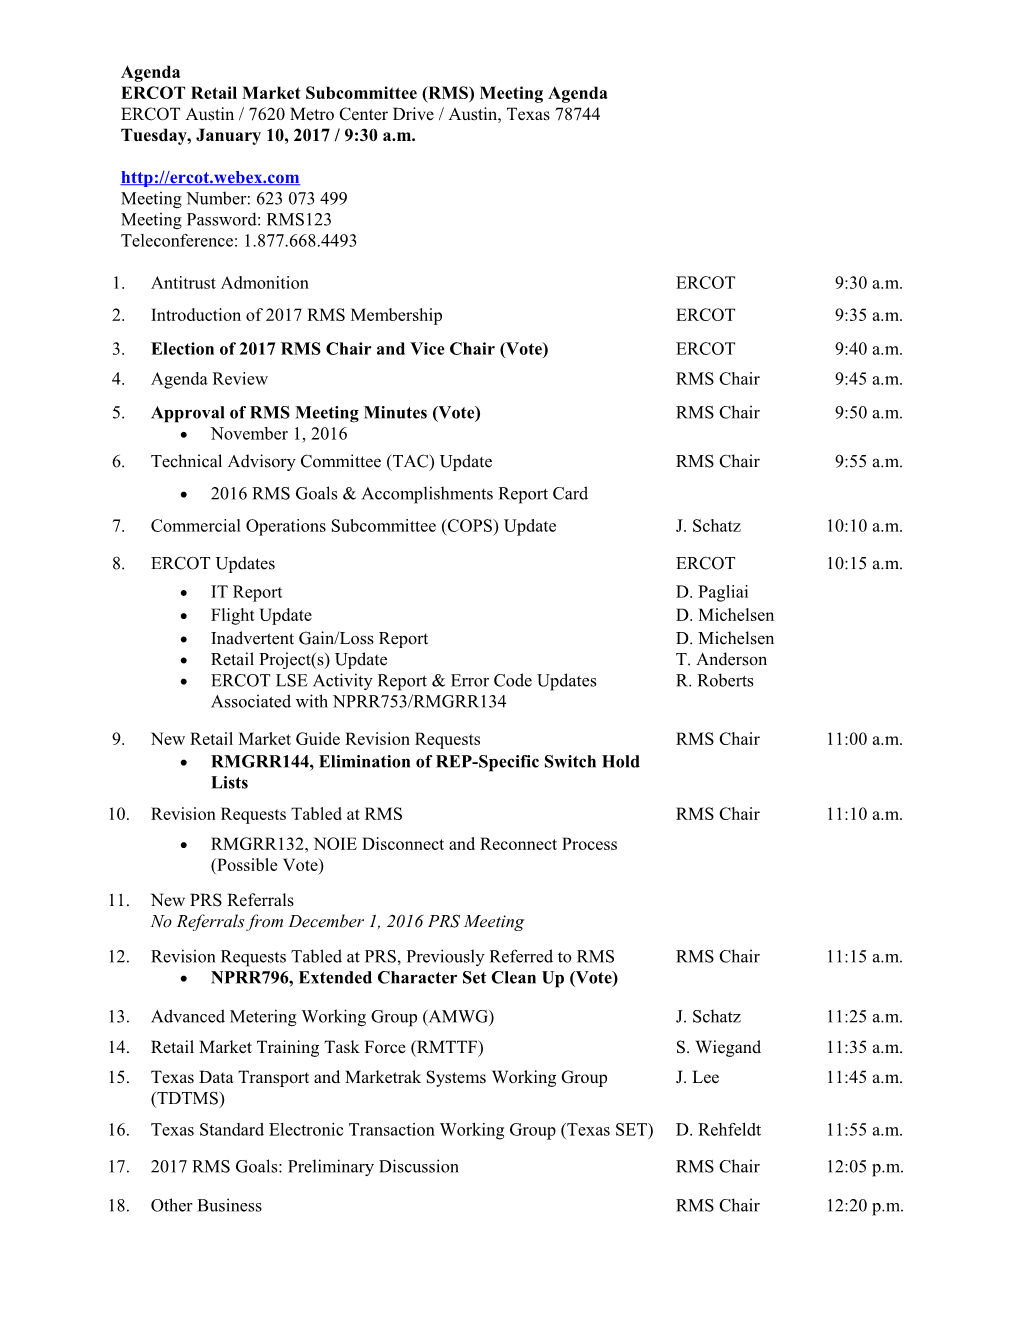 ERCOT Retail Market Subcommittee (RMS) Meeting Agenda